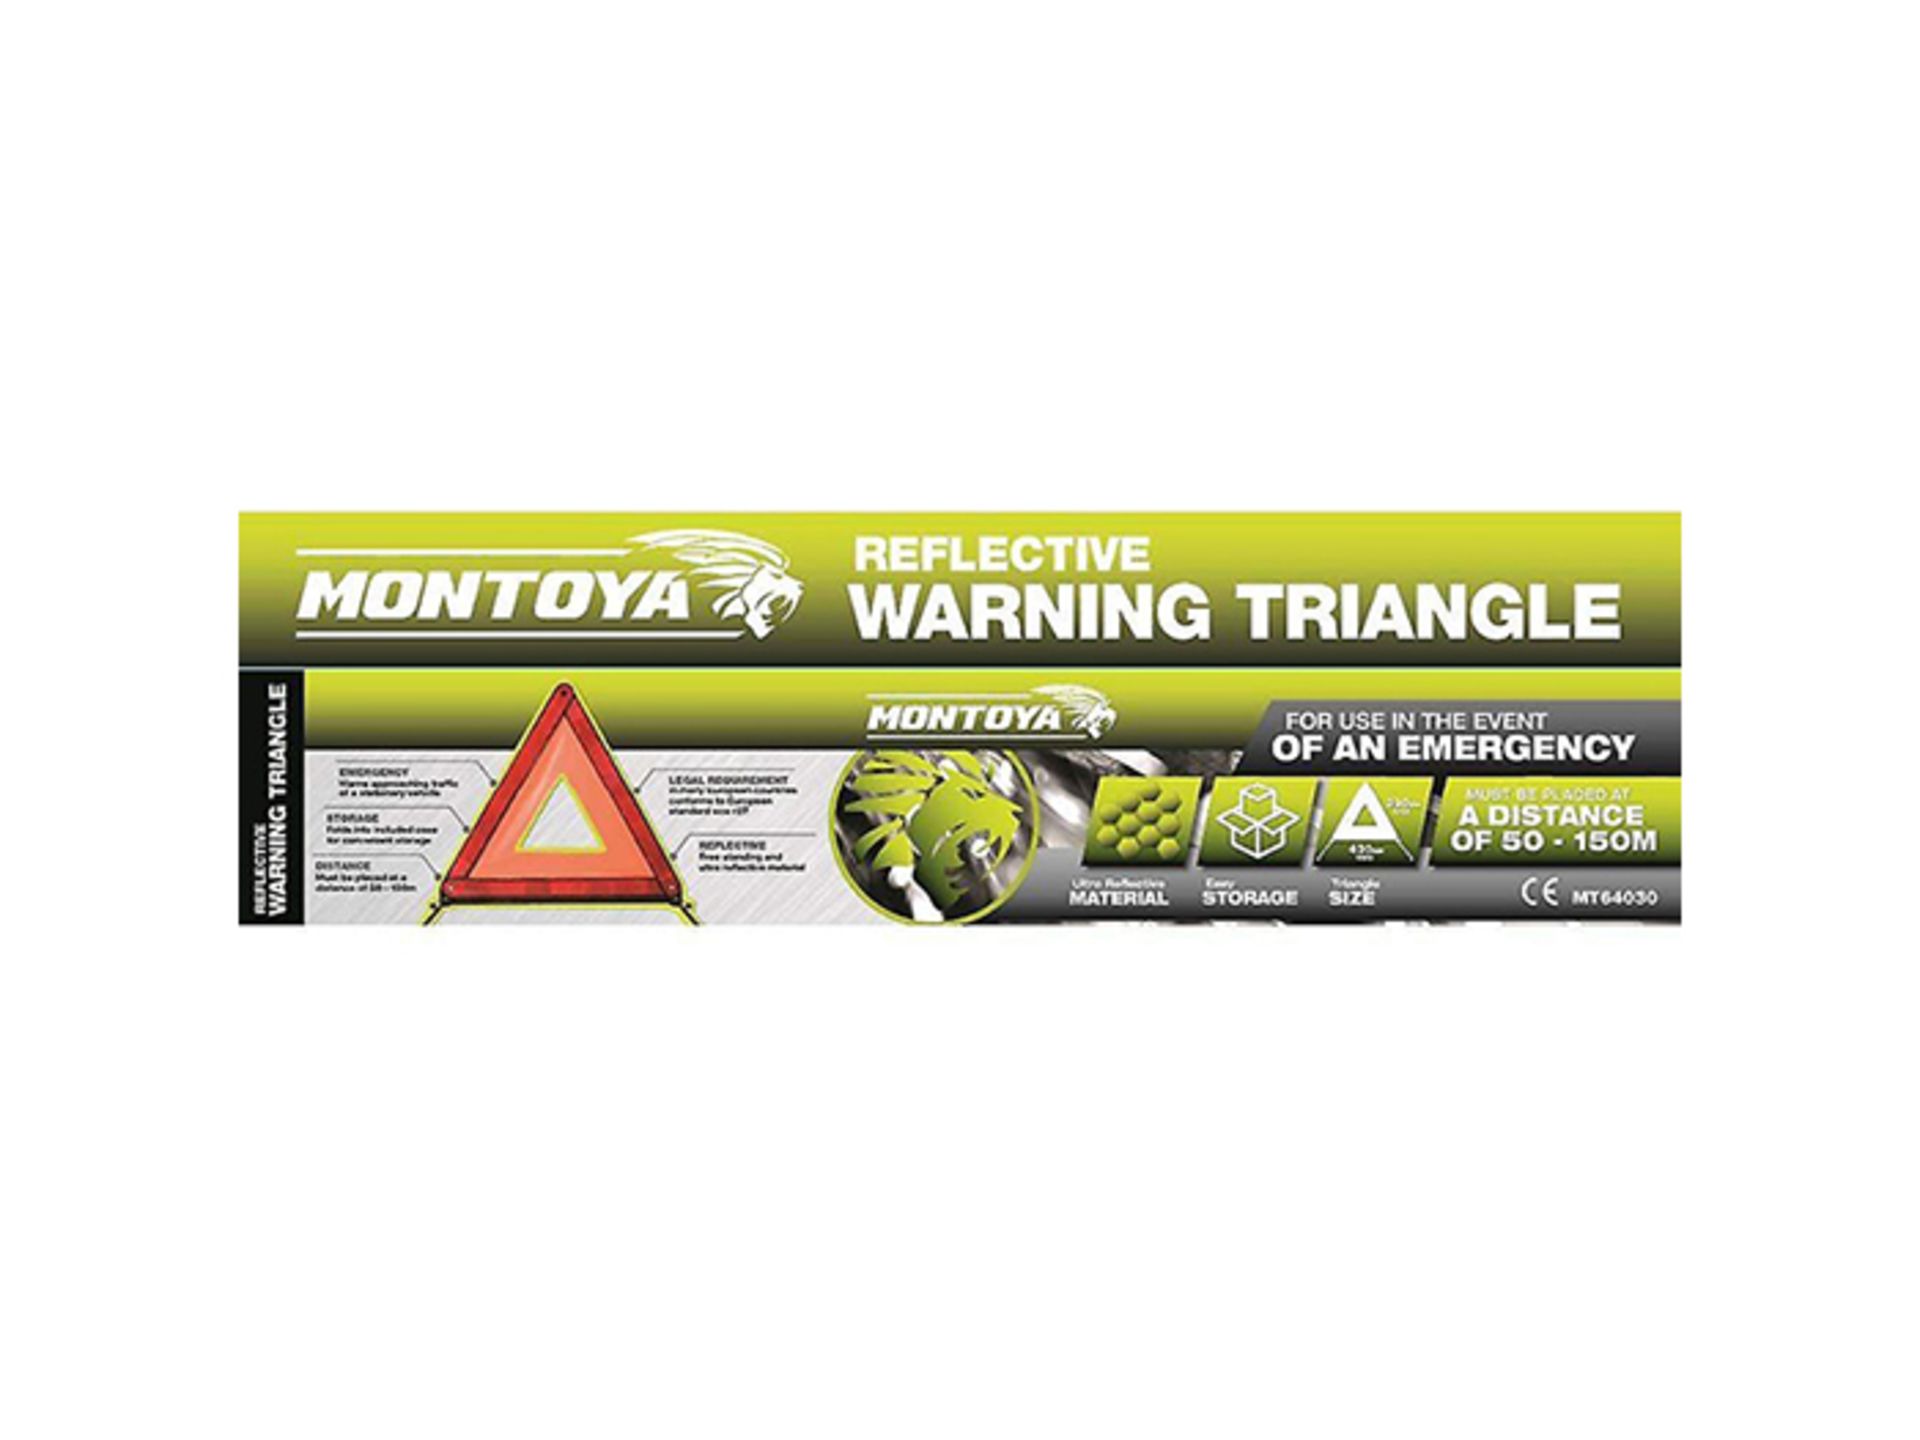 V Brand New Montoya Reflective Warning Triangle - Ultra Reflective Material - Easy Storage